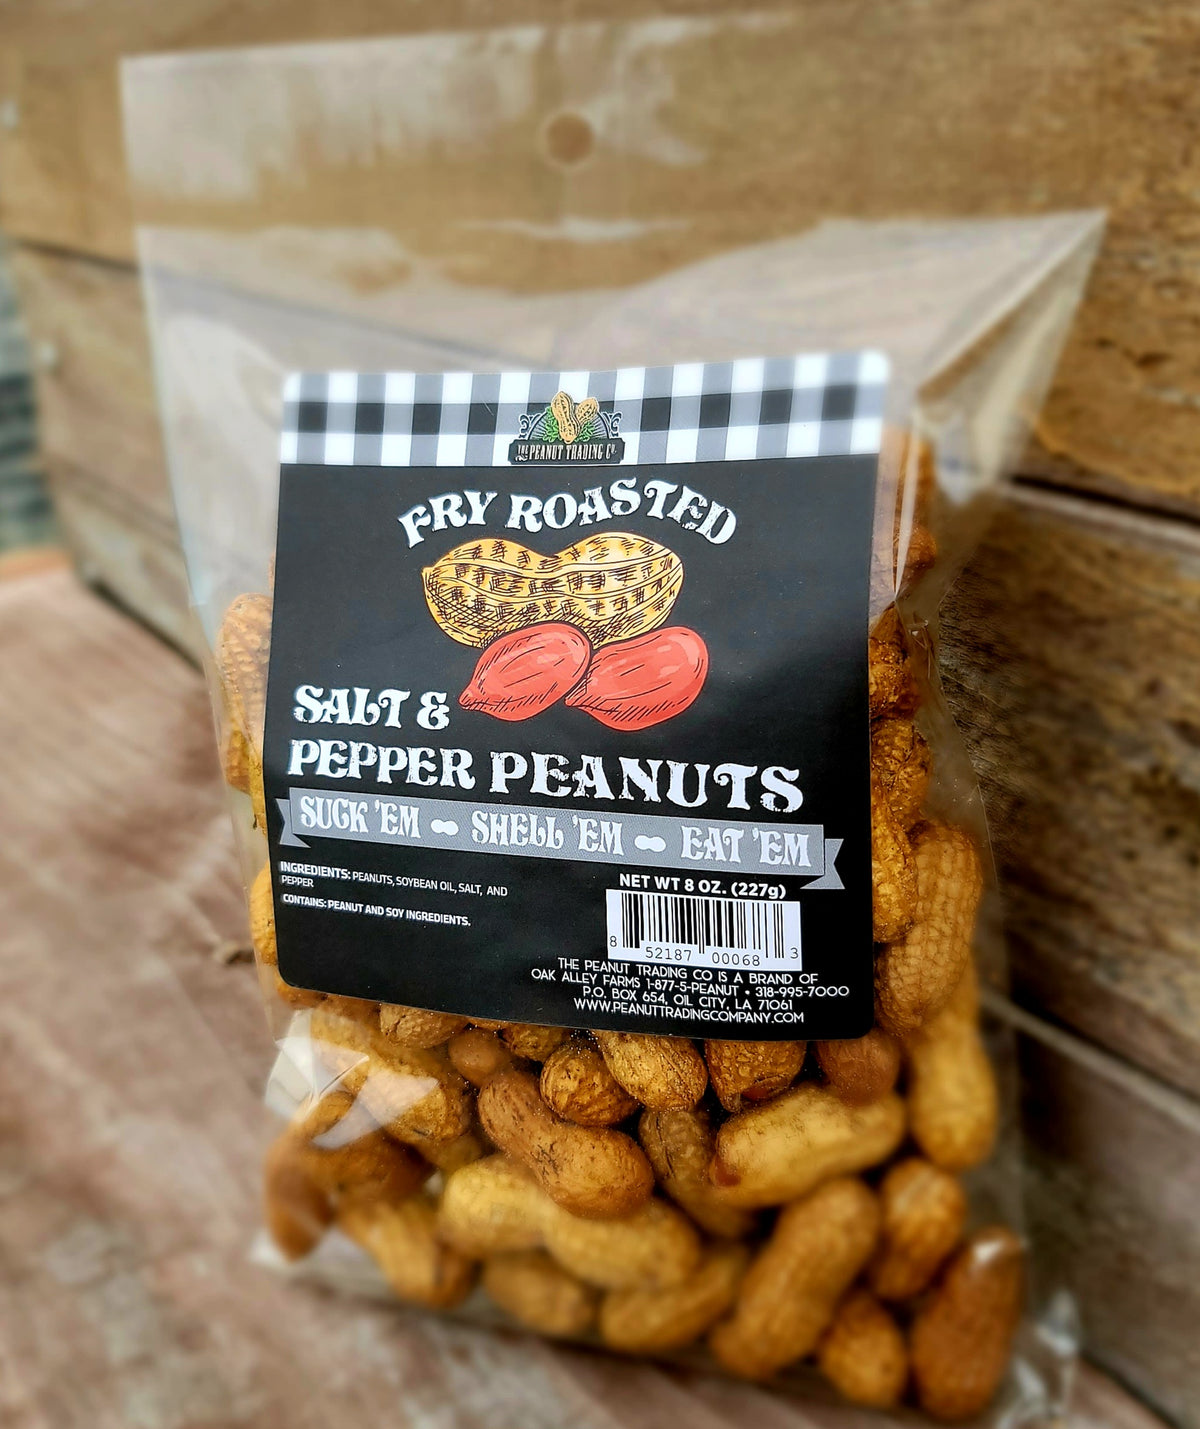 Peanut Trading Company - Fry Roasted Peanuts Counter Display - Salt & Pepper